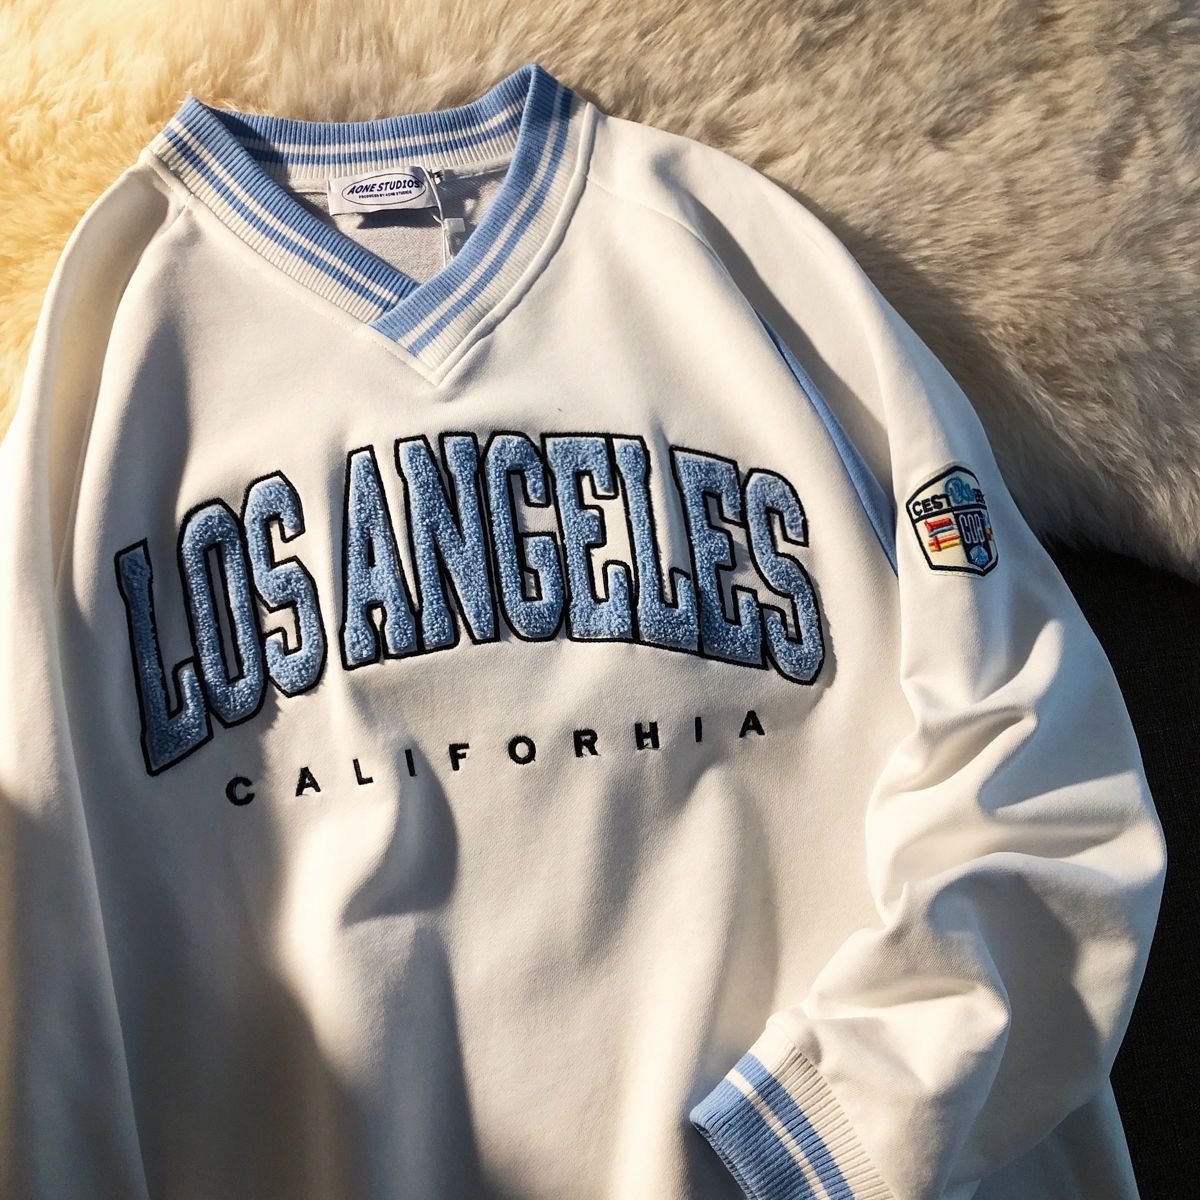 Los Angeles Sweatshirt - Aesthetic Clothing